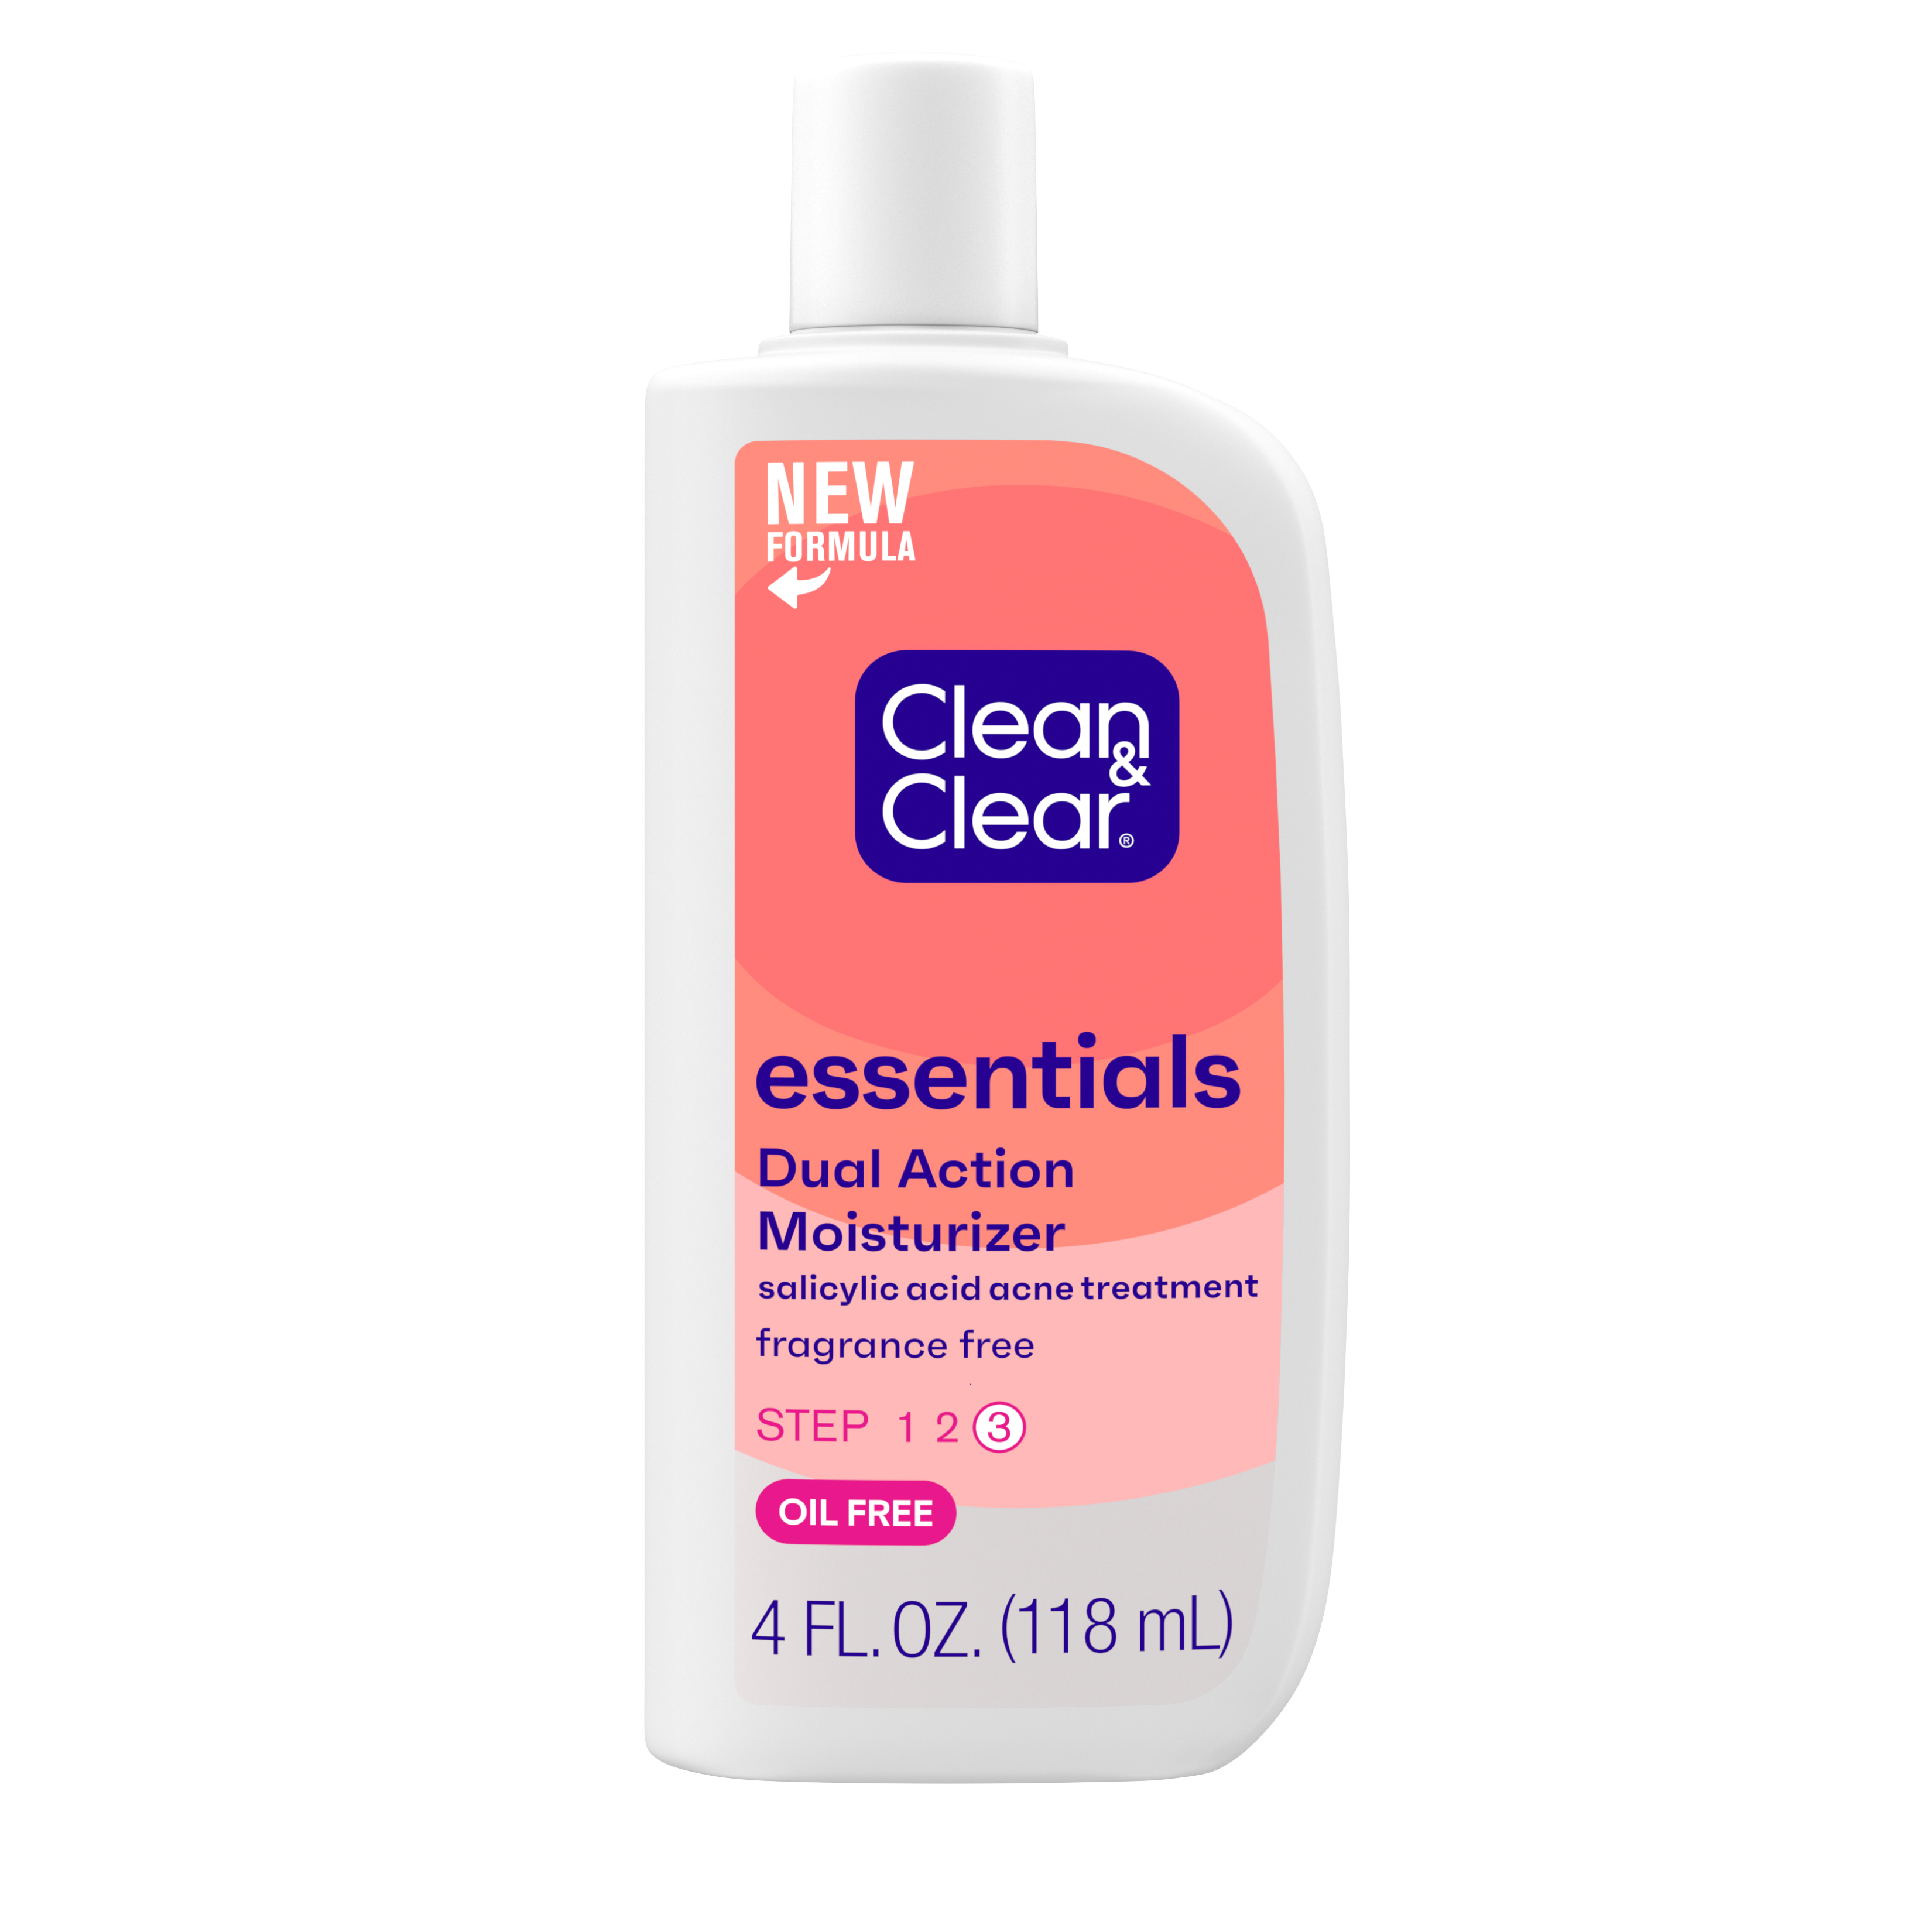 Clean Skin Club Acne Mist Salicylic Acid Spot Treatment Dramatic